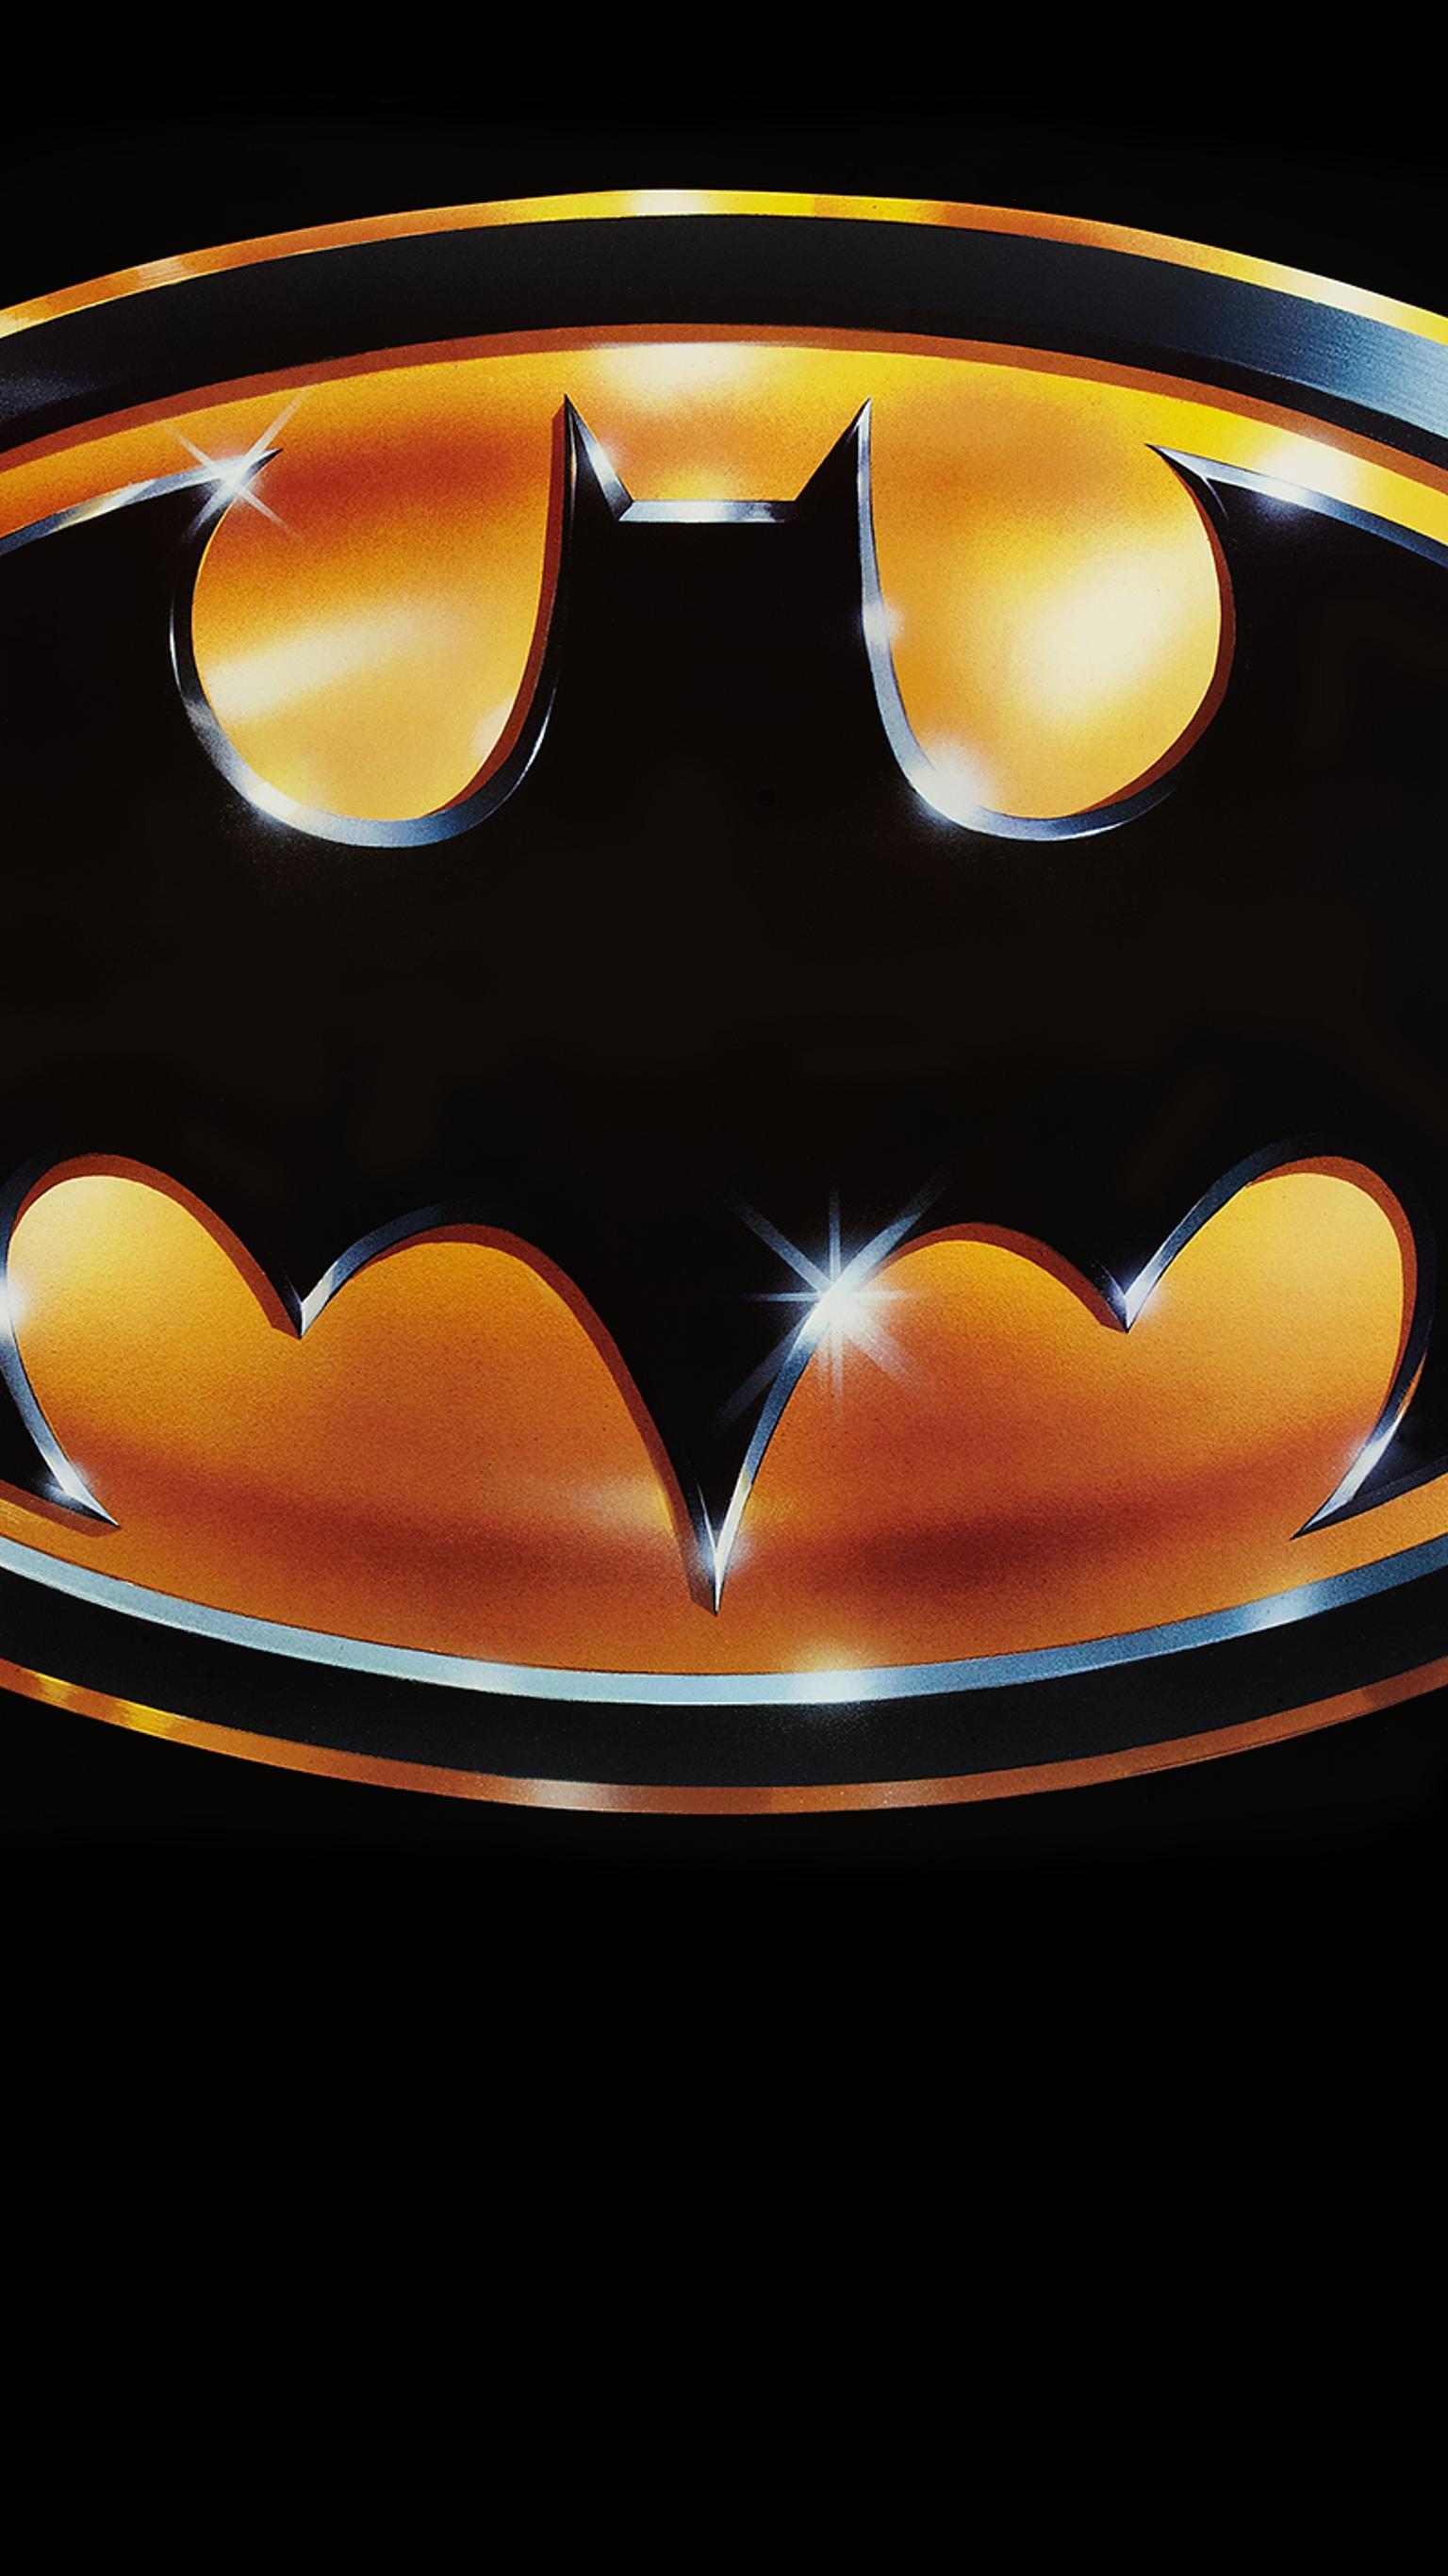 Batman (1989) Phone Wallpaper